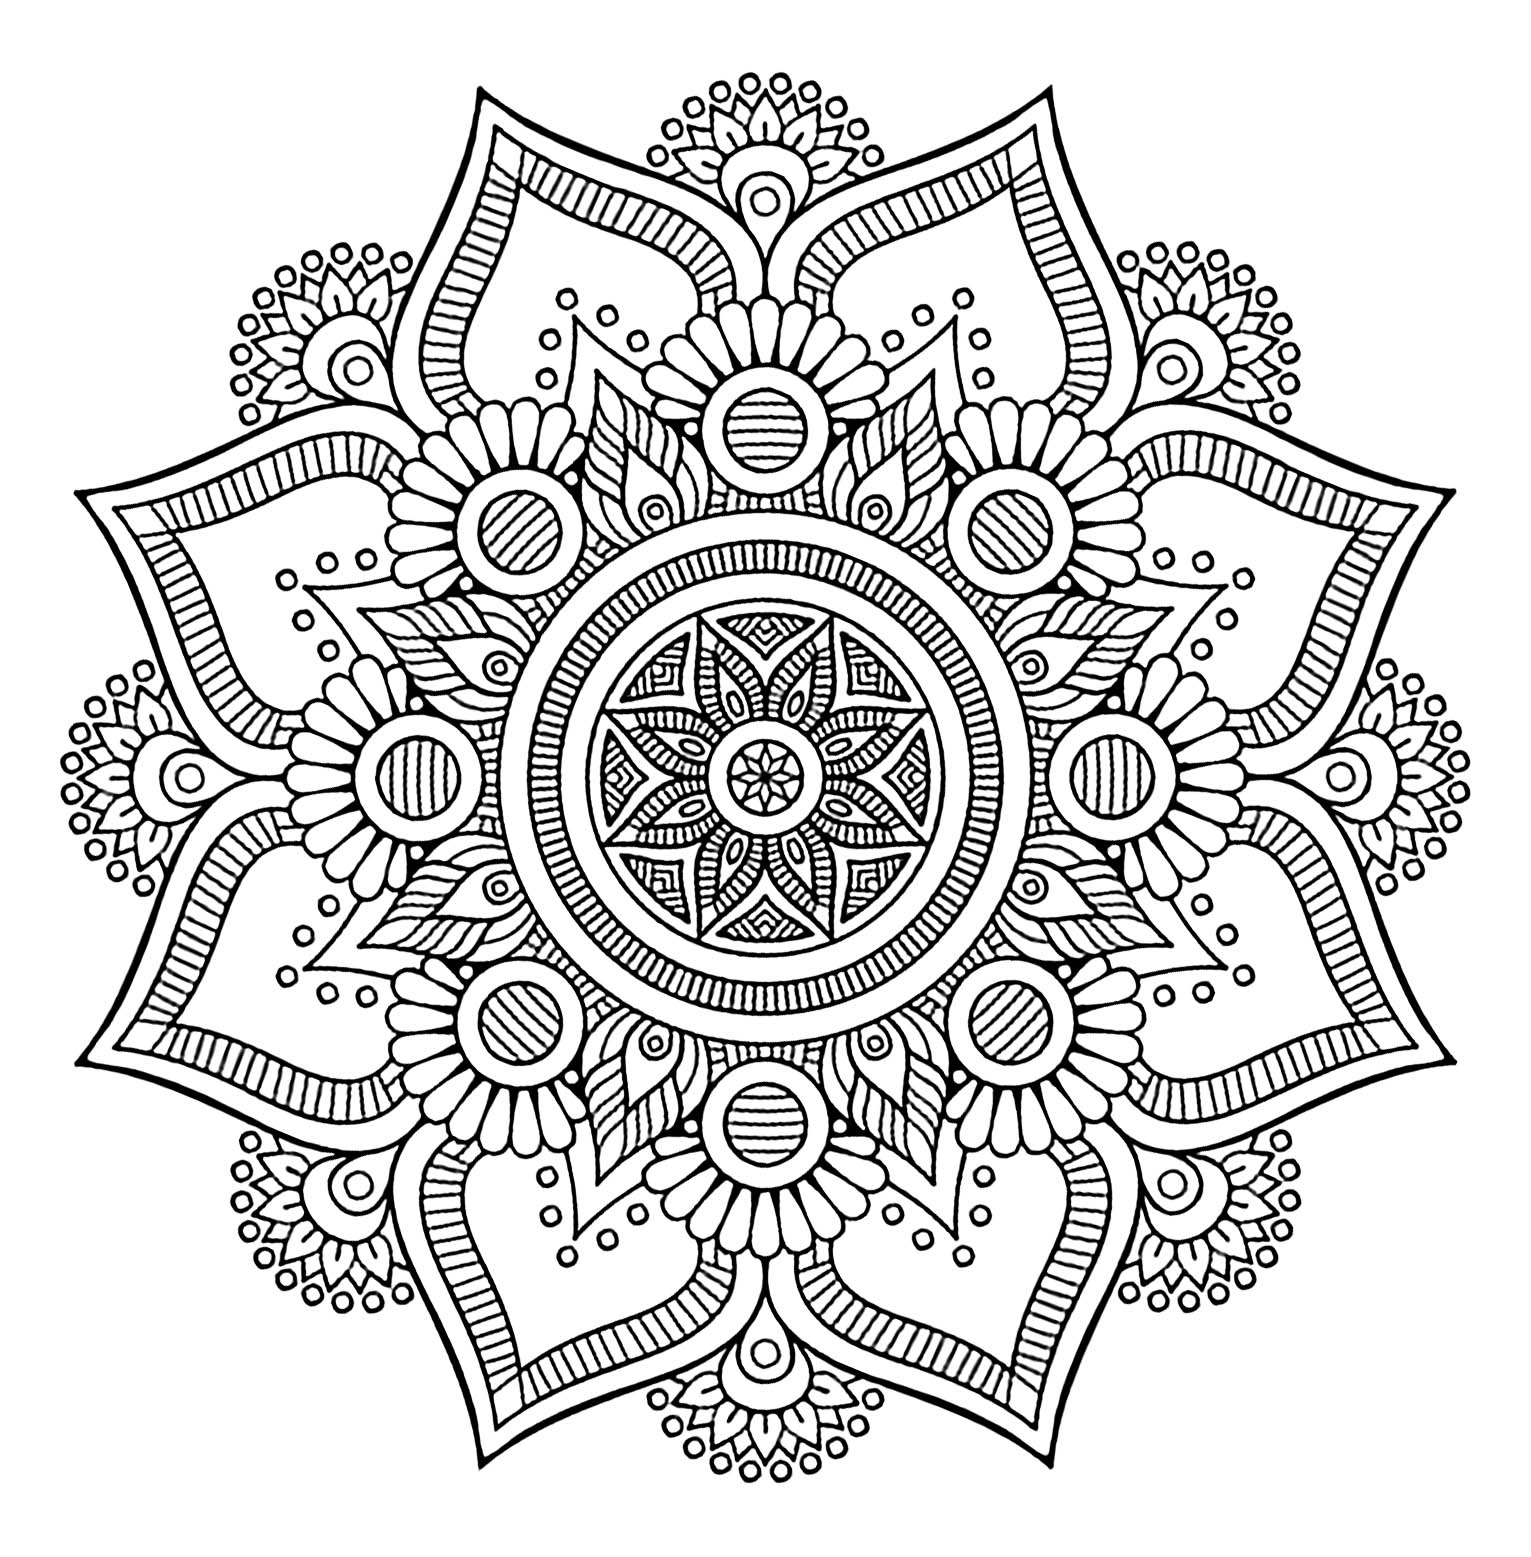 Cool Mandala with 8 big petals and vegetal patterns